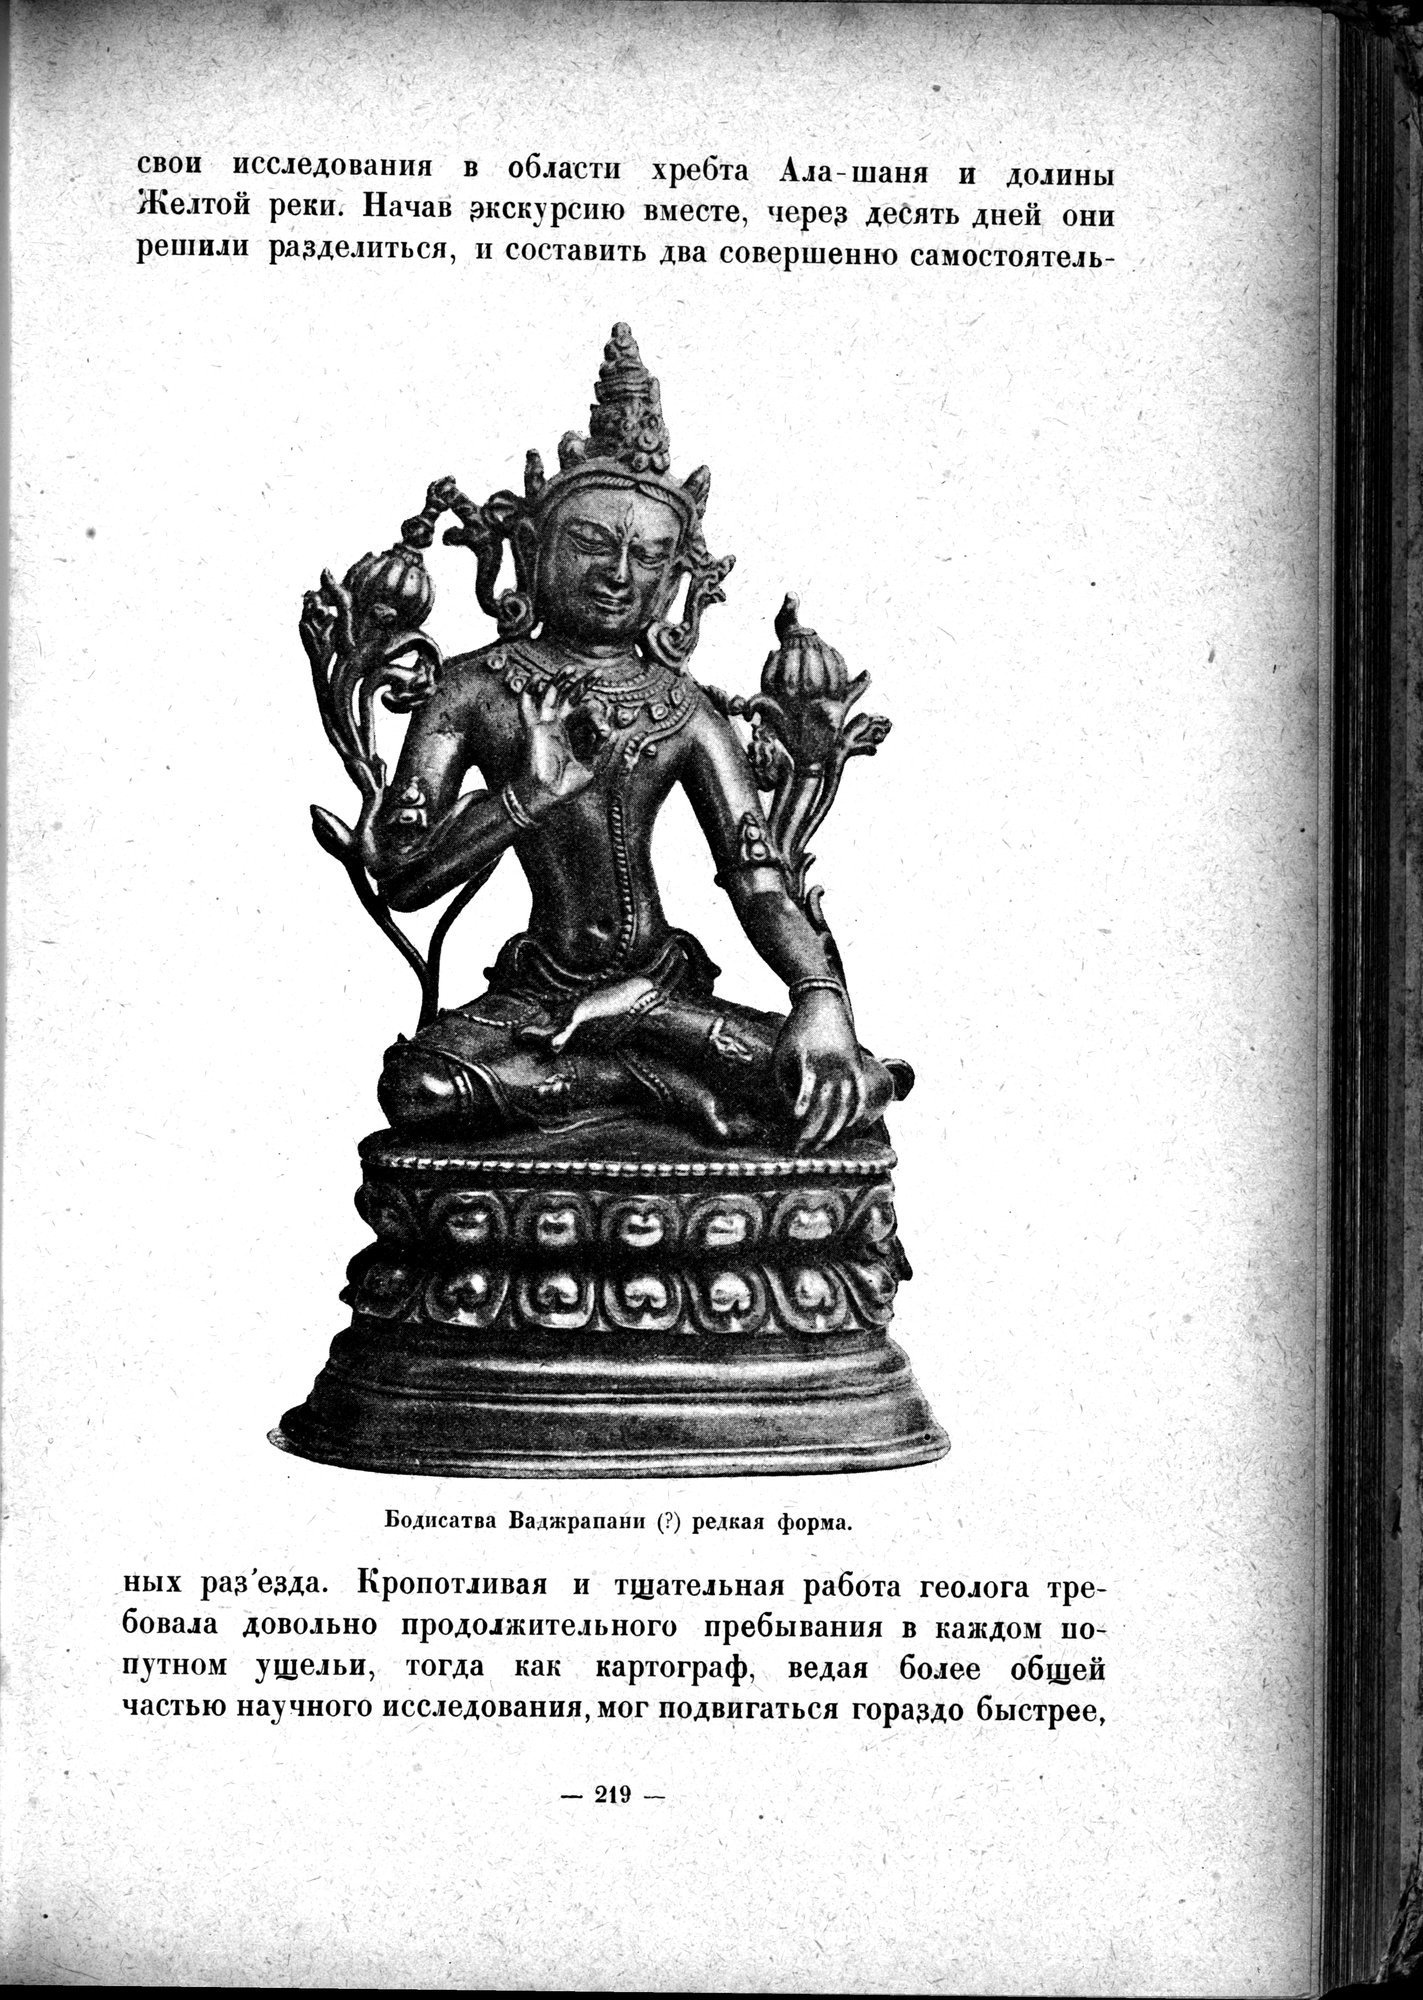 Mongoliya i Amdo i mertby gorod Khara-Khoto : vol.1 / Page 265 (Grayscale High Resolution Image)